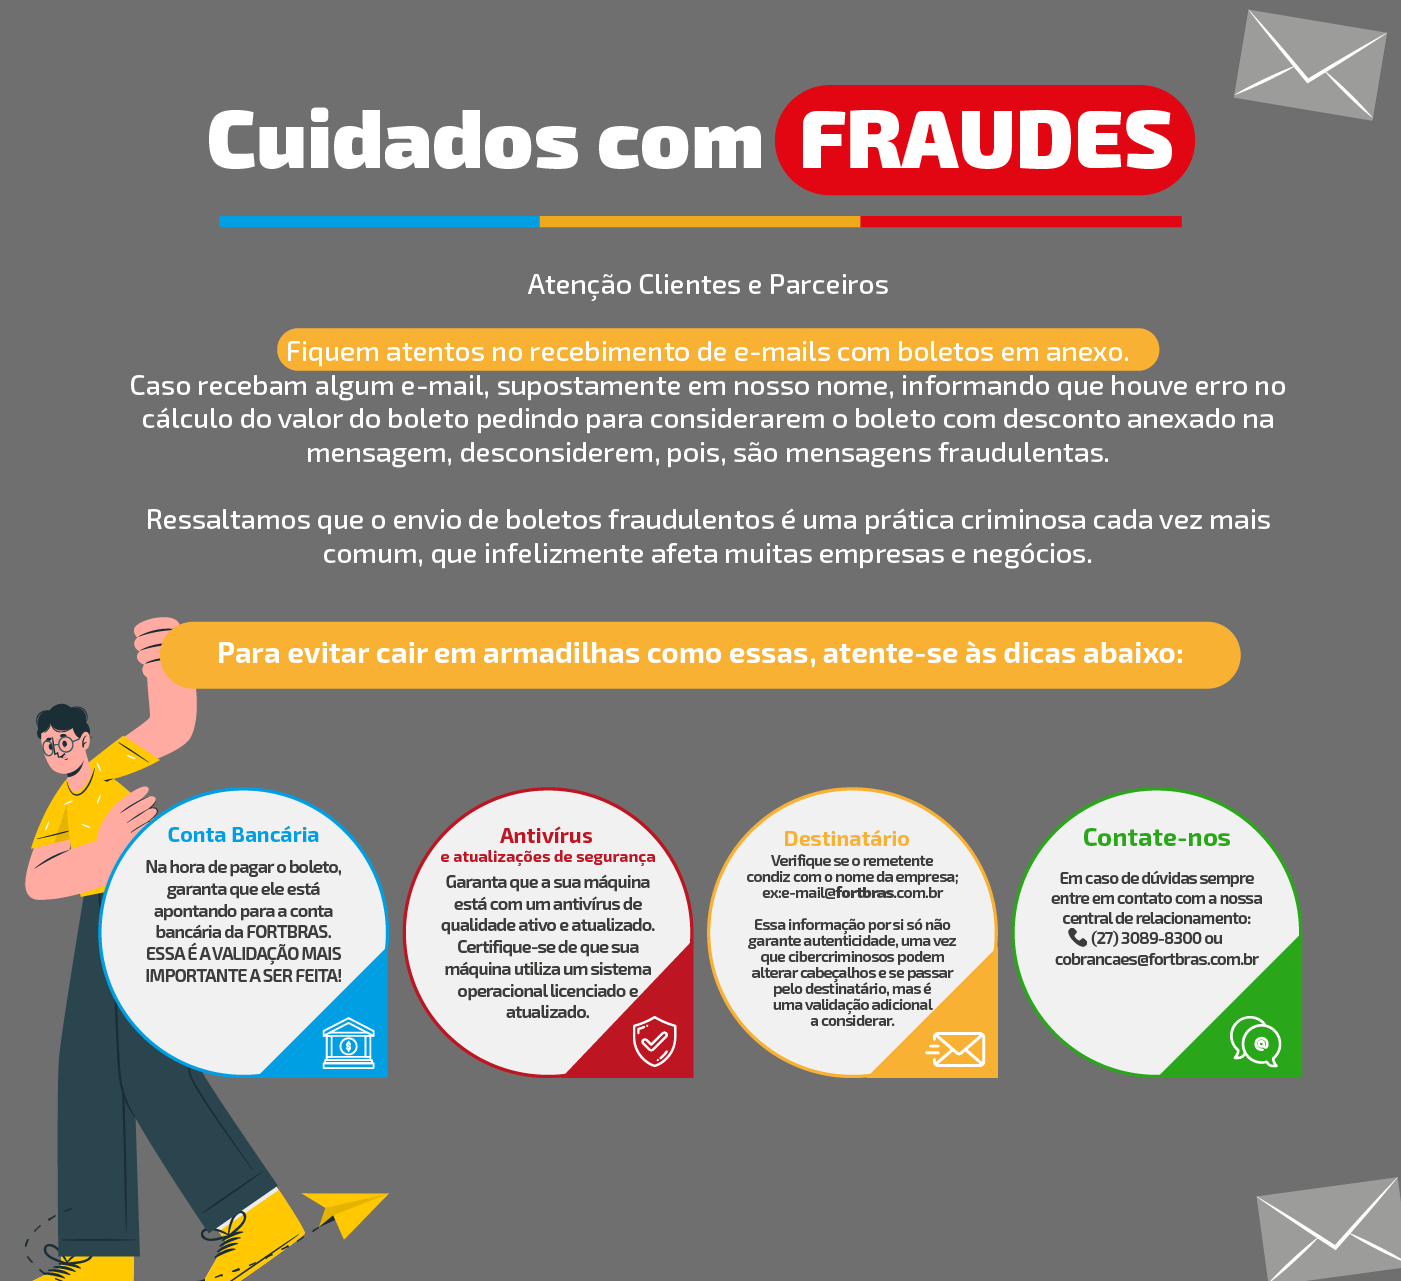 https://multiplanpecas.com.br/Multiplan - fraude